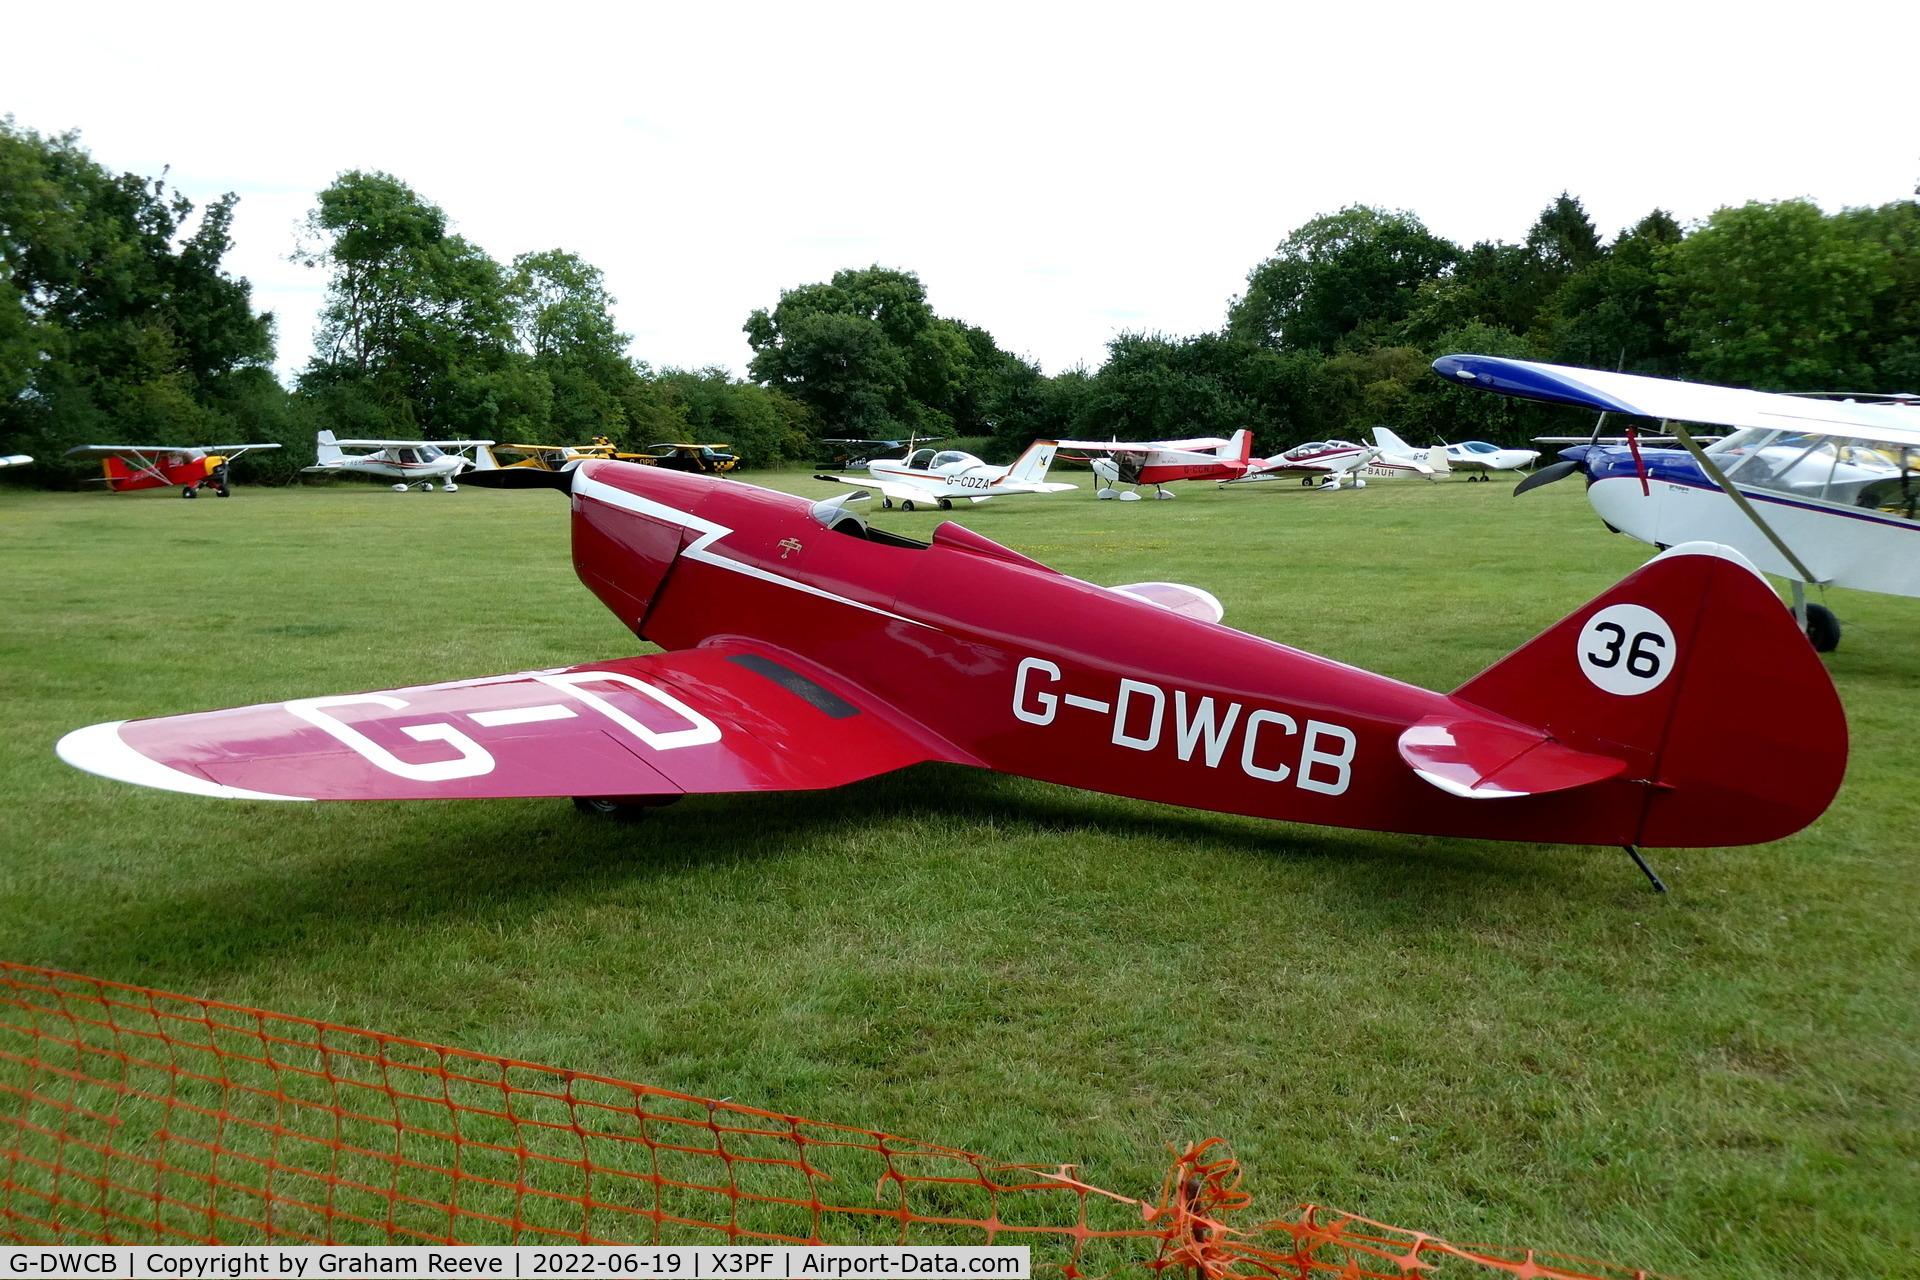 G-DWCB, 2015 Chilton DW1A C/N PFA 225-14454, Parked at Priory Farm.